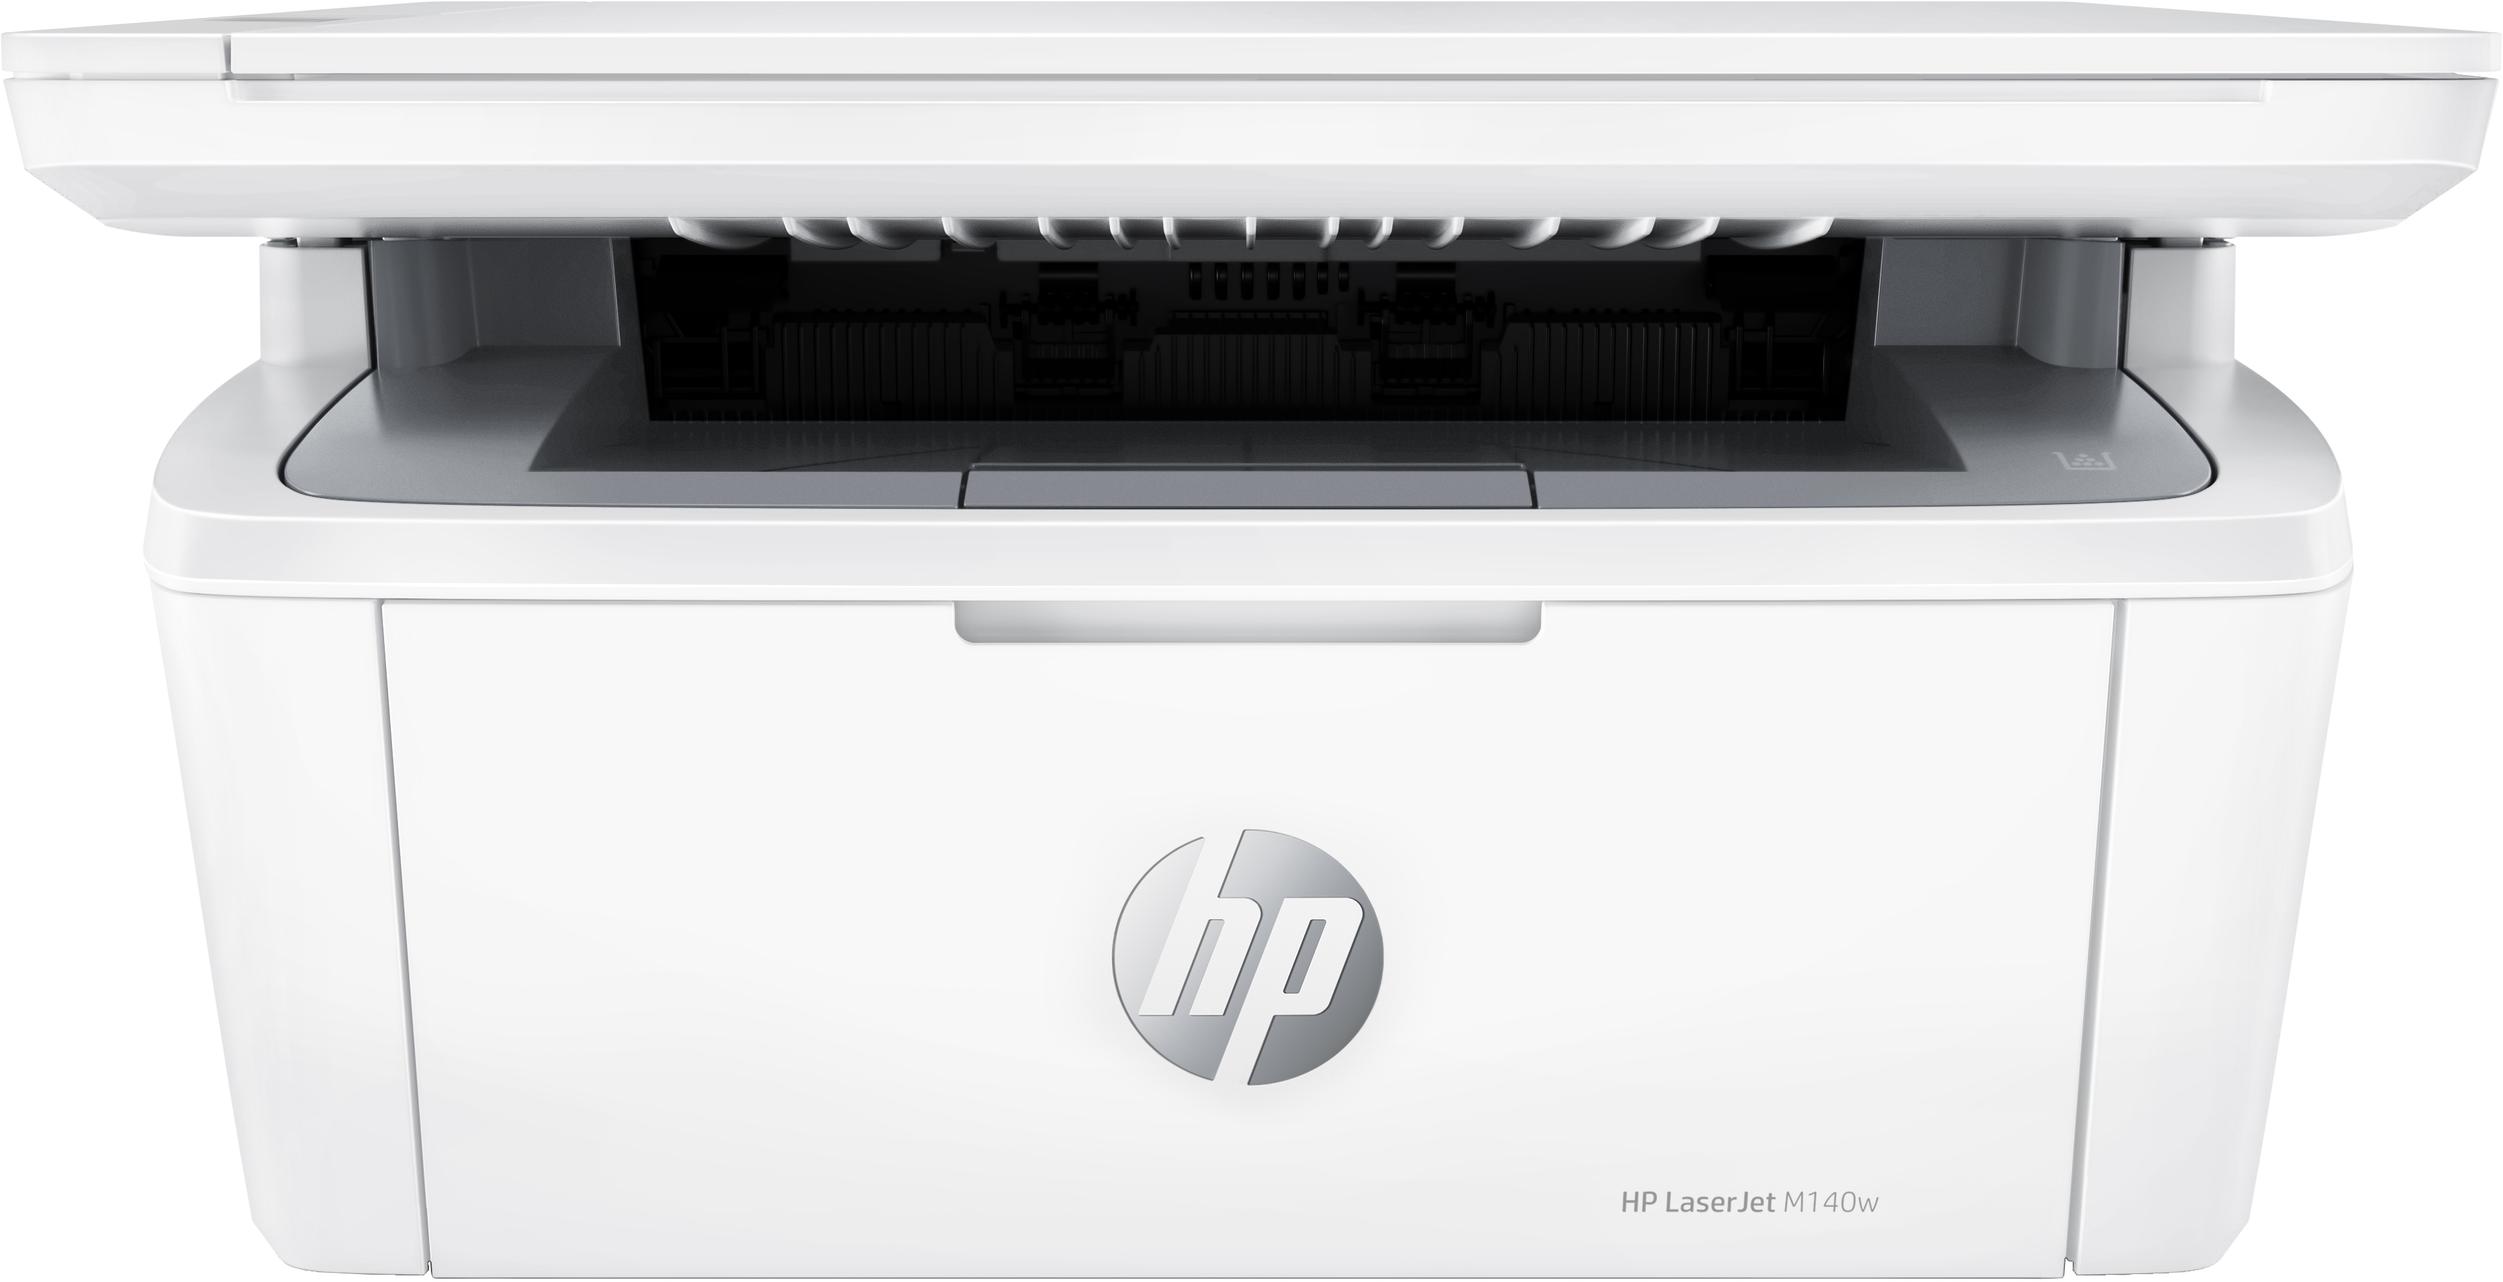 Offerta per HP - LaserJet Stampante multifunzione M140w, Bianco e nero, Stampante per Piccoli uffici, Stampa, copia, scansione, Scansione verso e-mail; scansione verso PDF; dimensioni compatte a 129,9€ in Expert